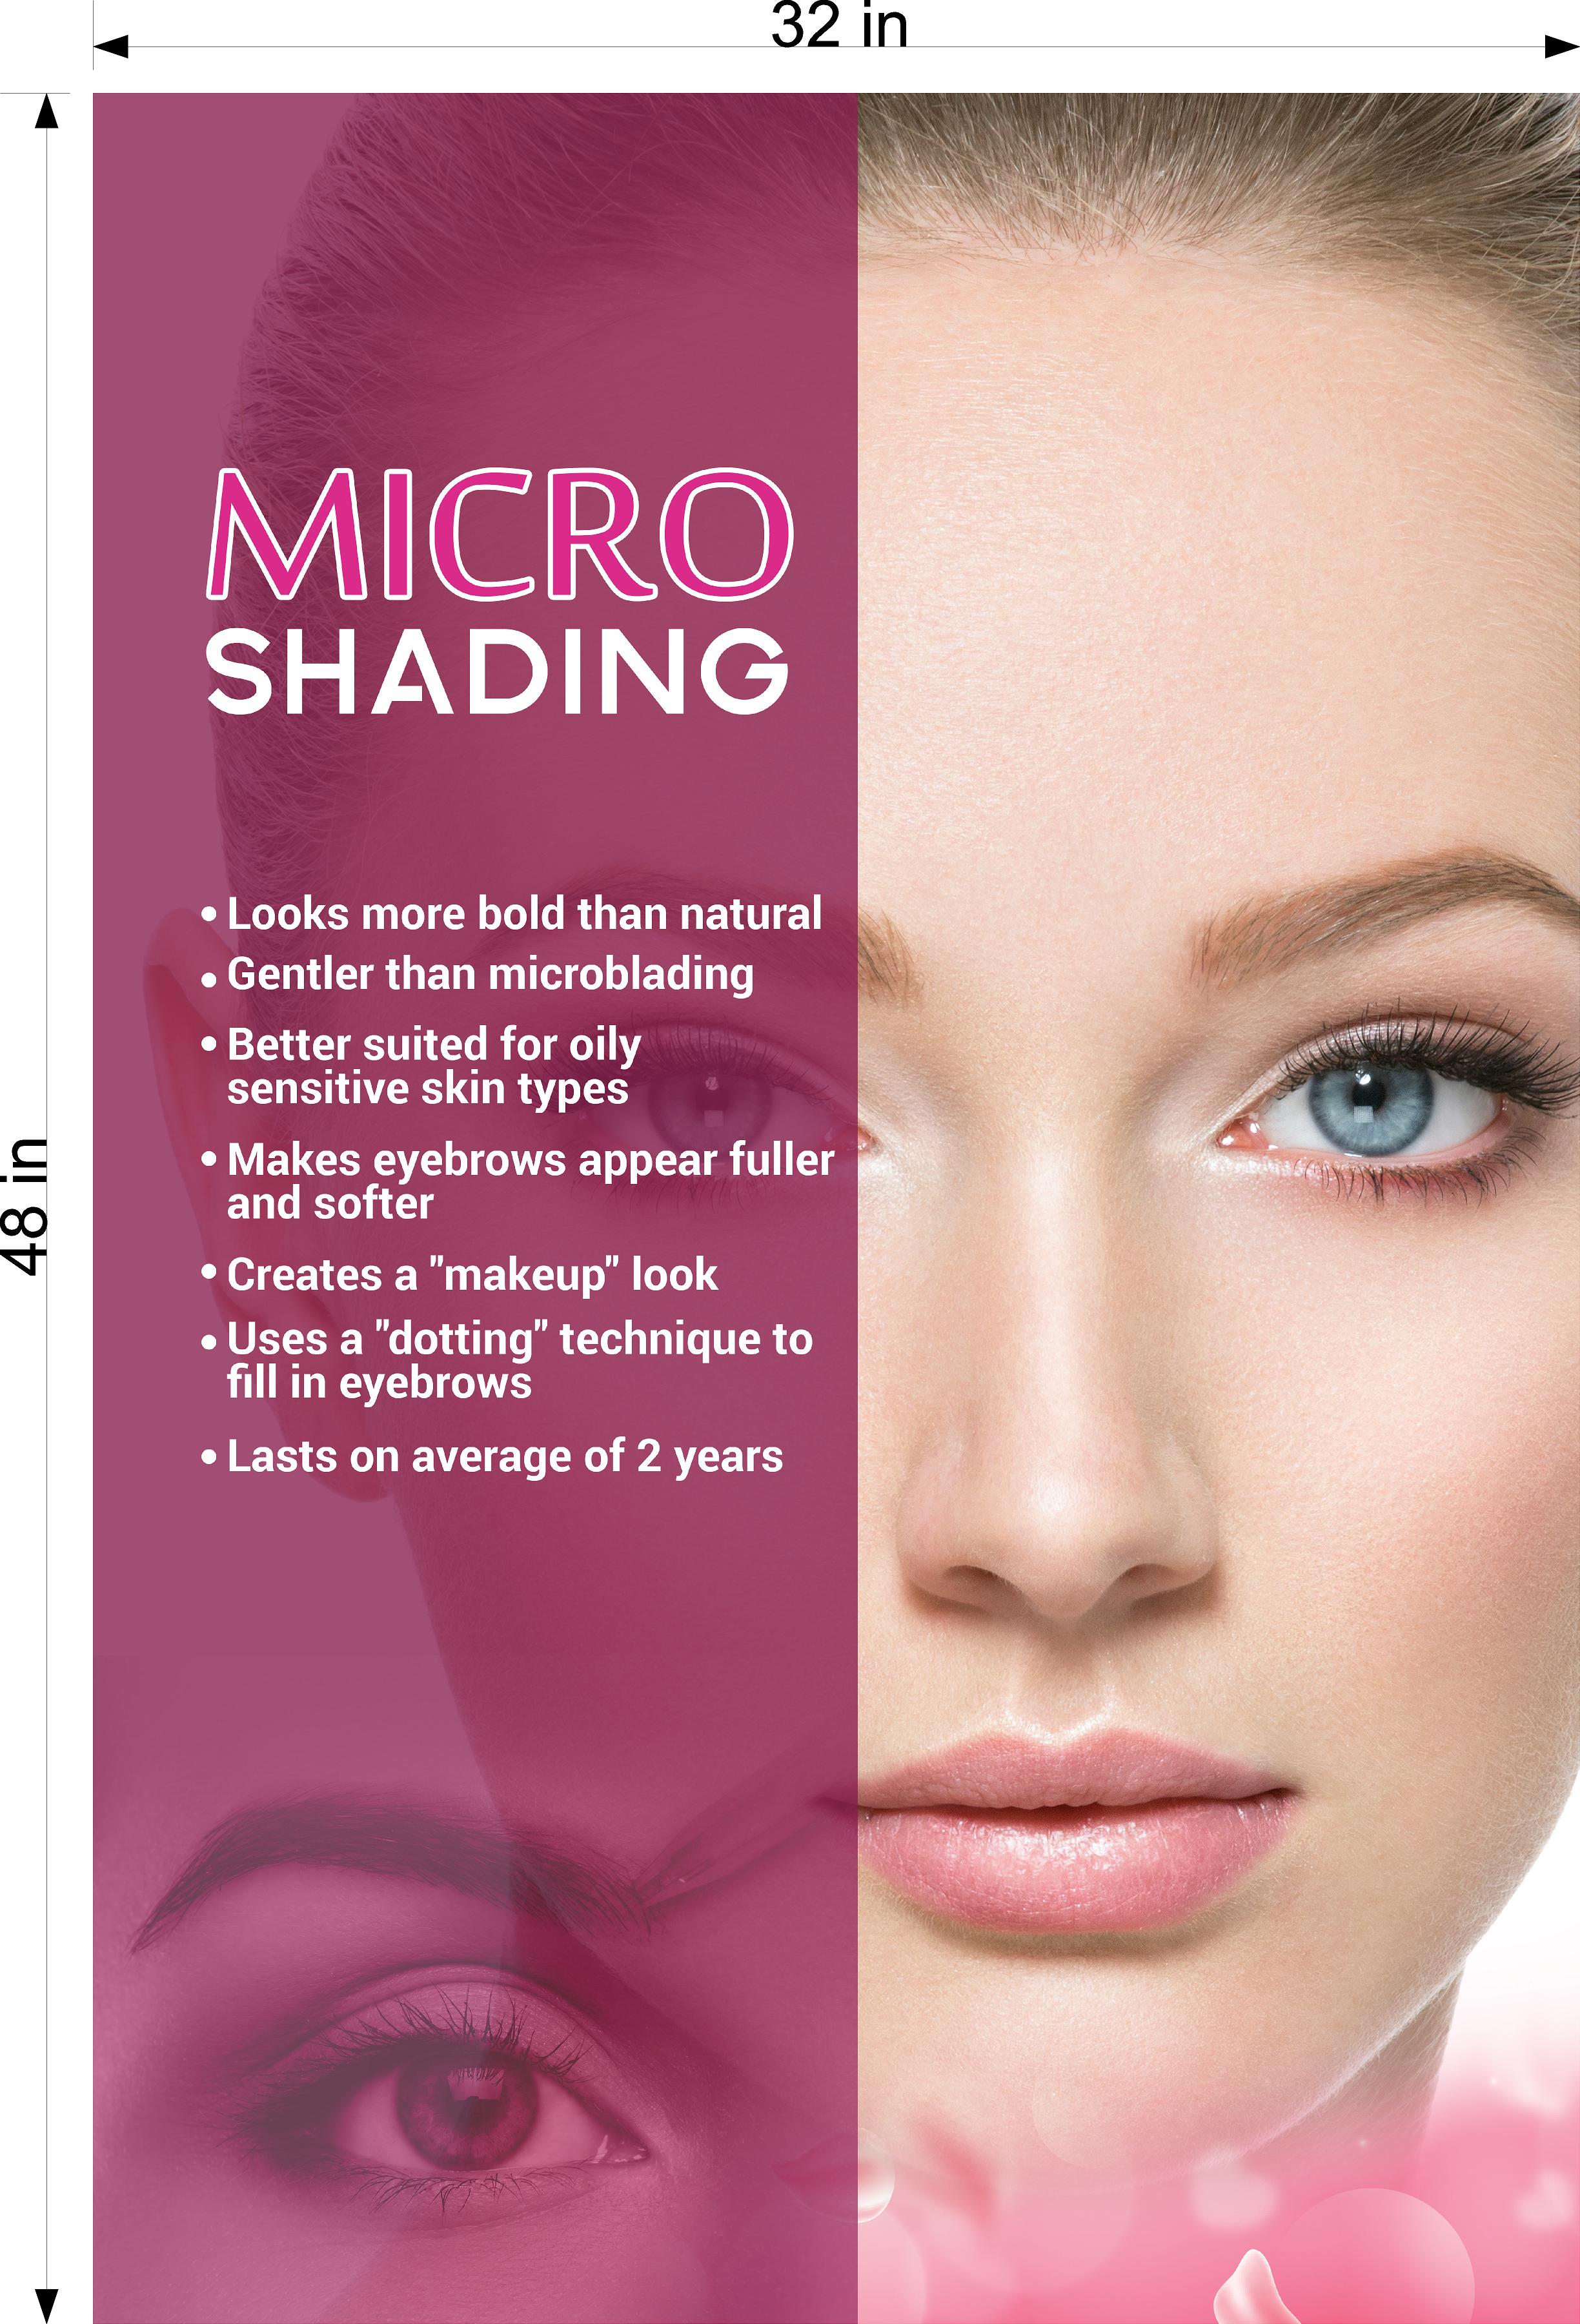 Microshading 04 Photo-Realistic Paper Poster Non-Laminated Services Semi-permanent Make-Up shading Eyebrows Vertical